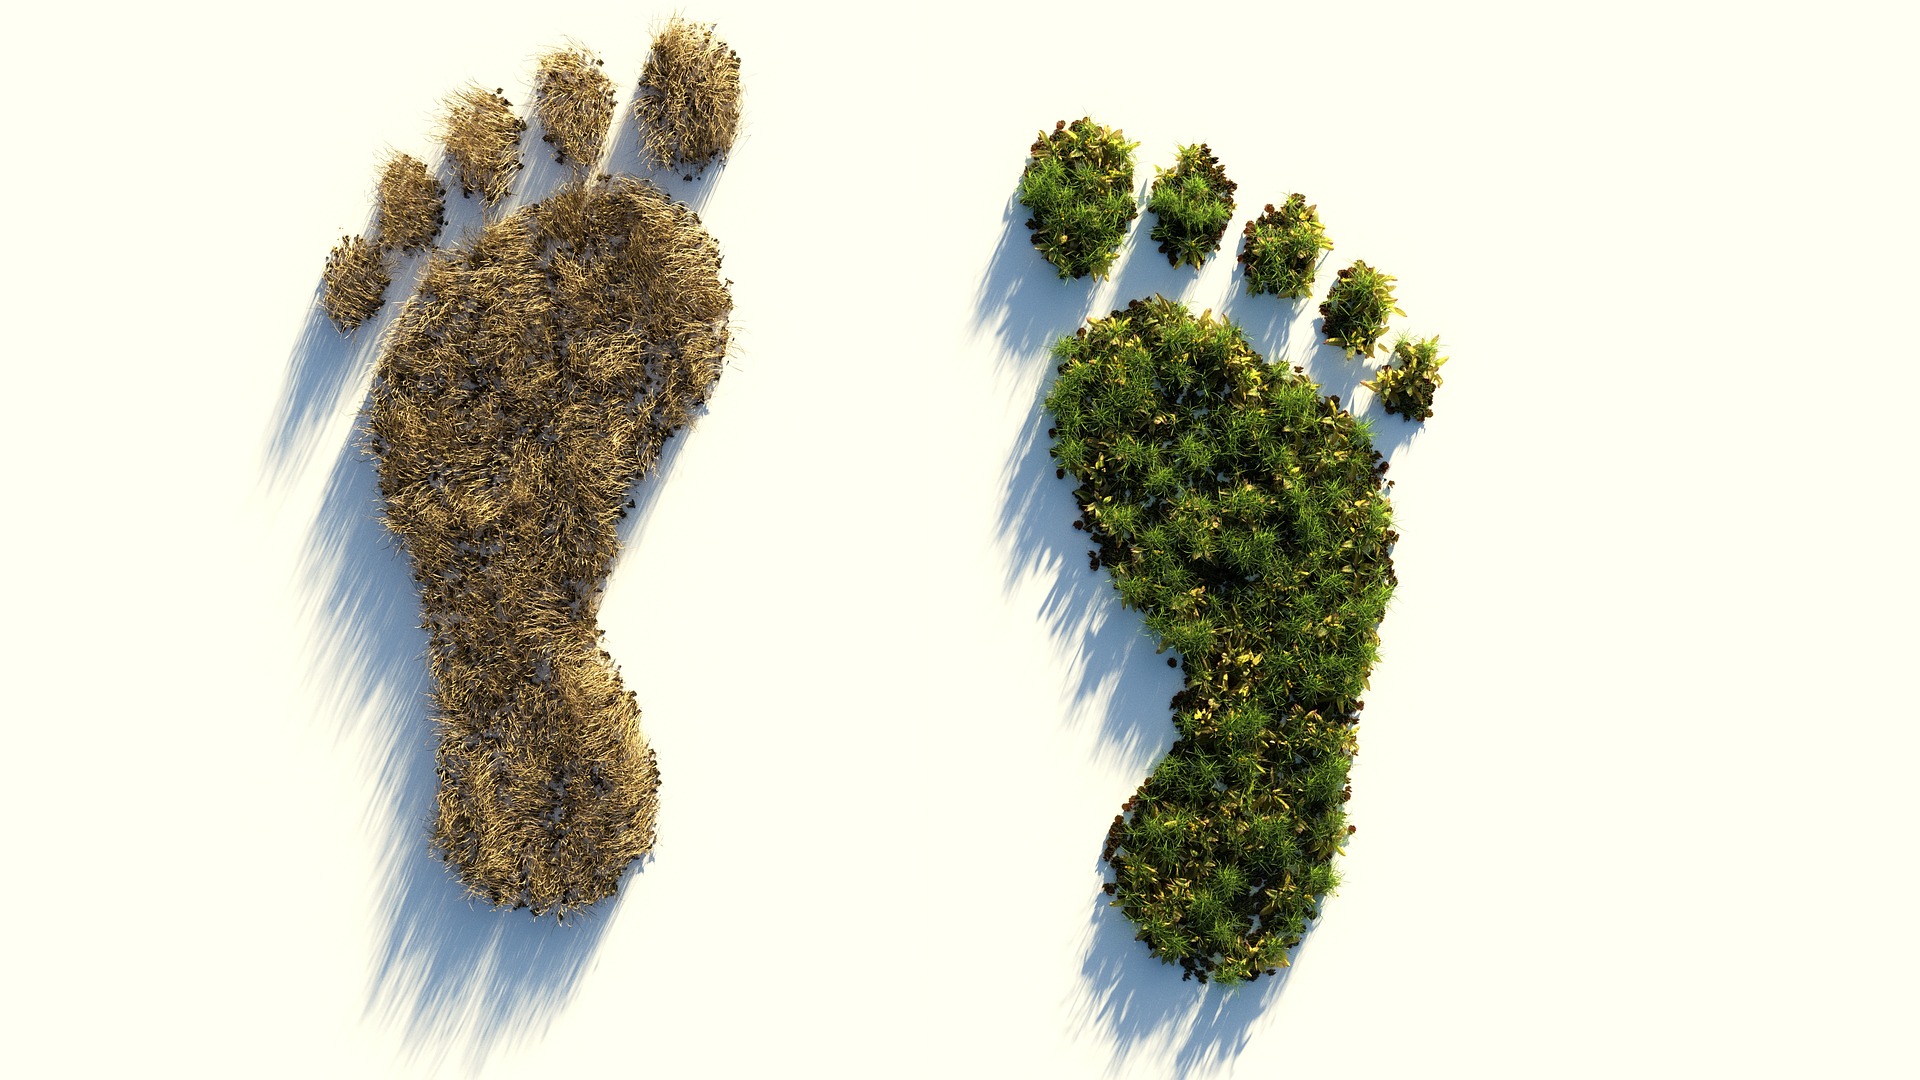 ecological-footprint-g562edfd16_1920